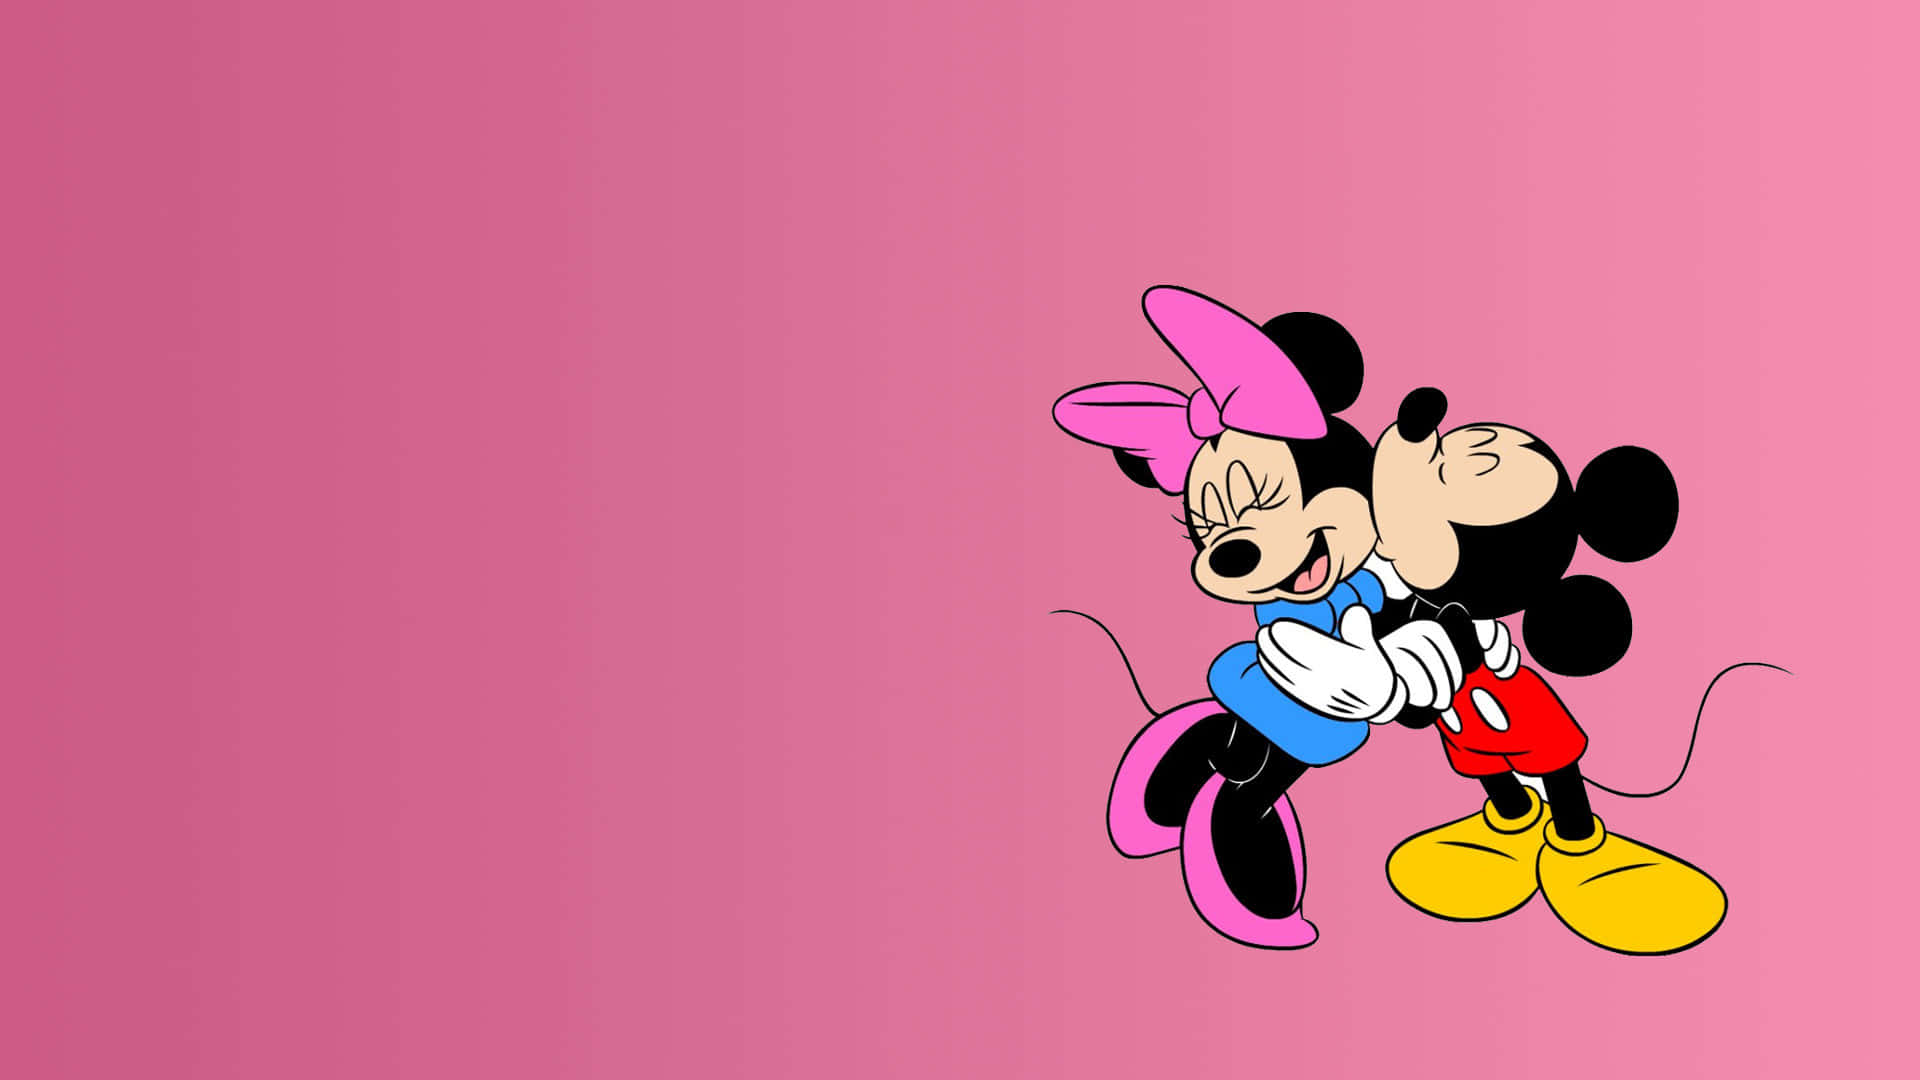 Minnie Mouse waving hello